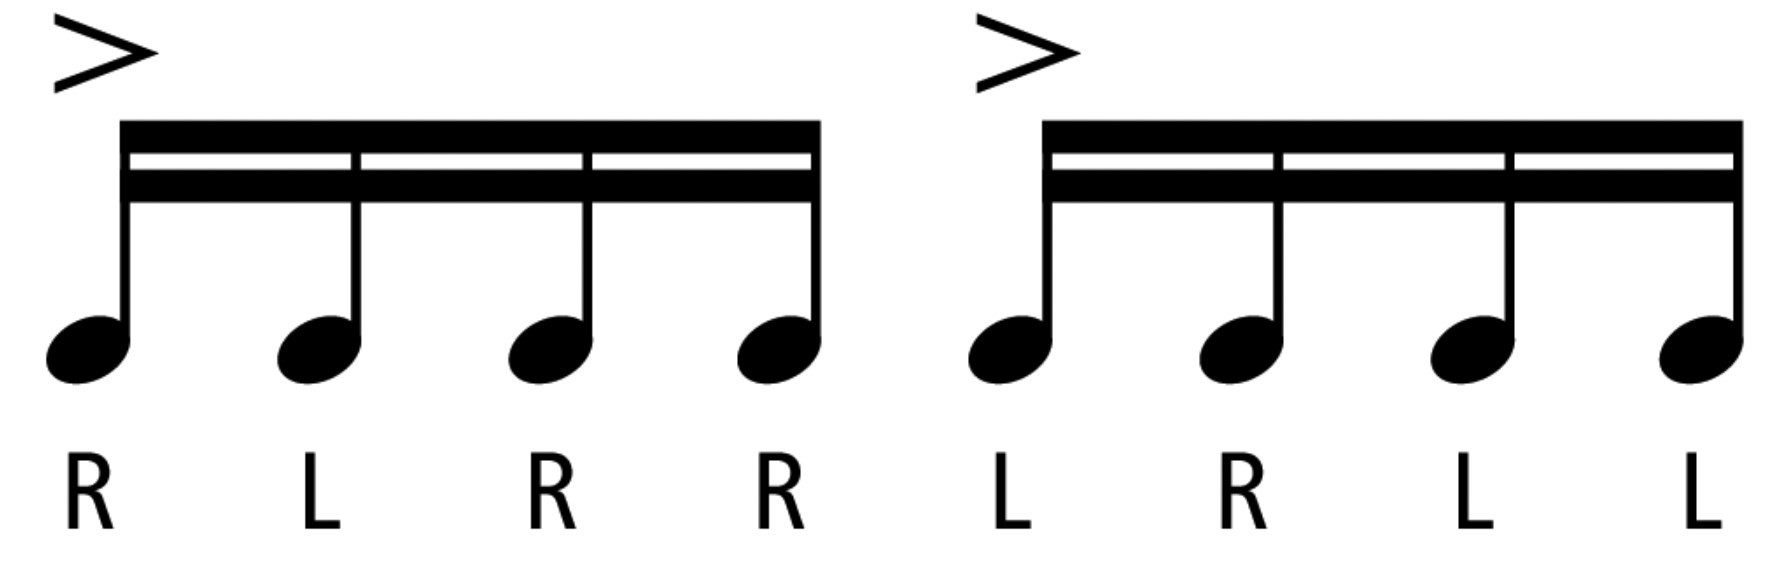 music notation1